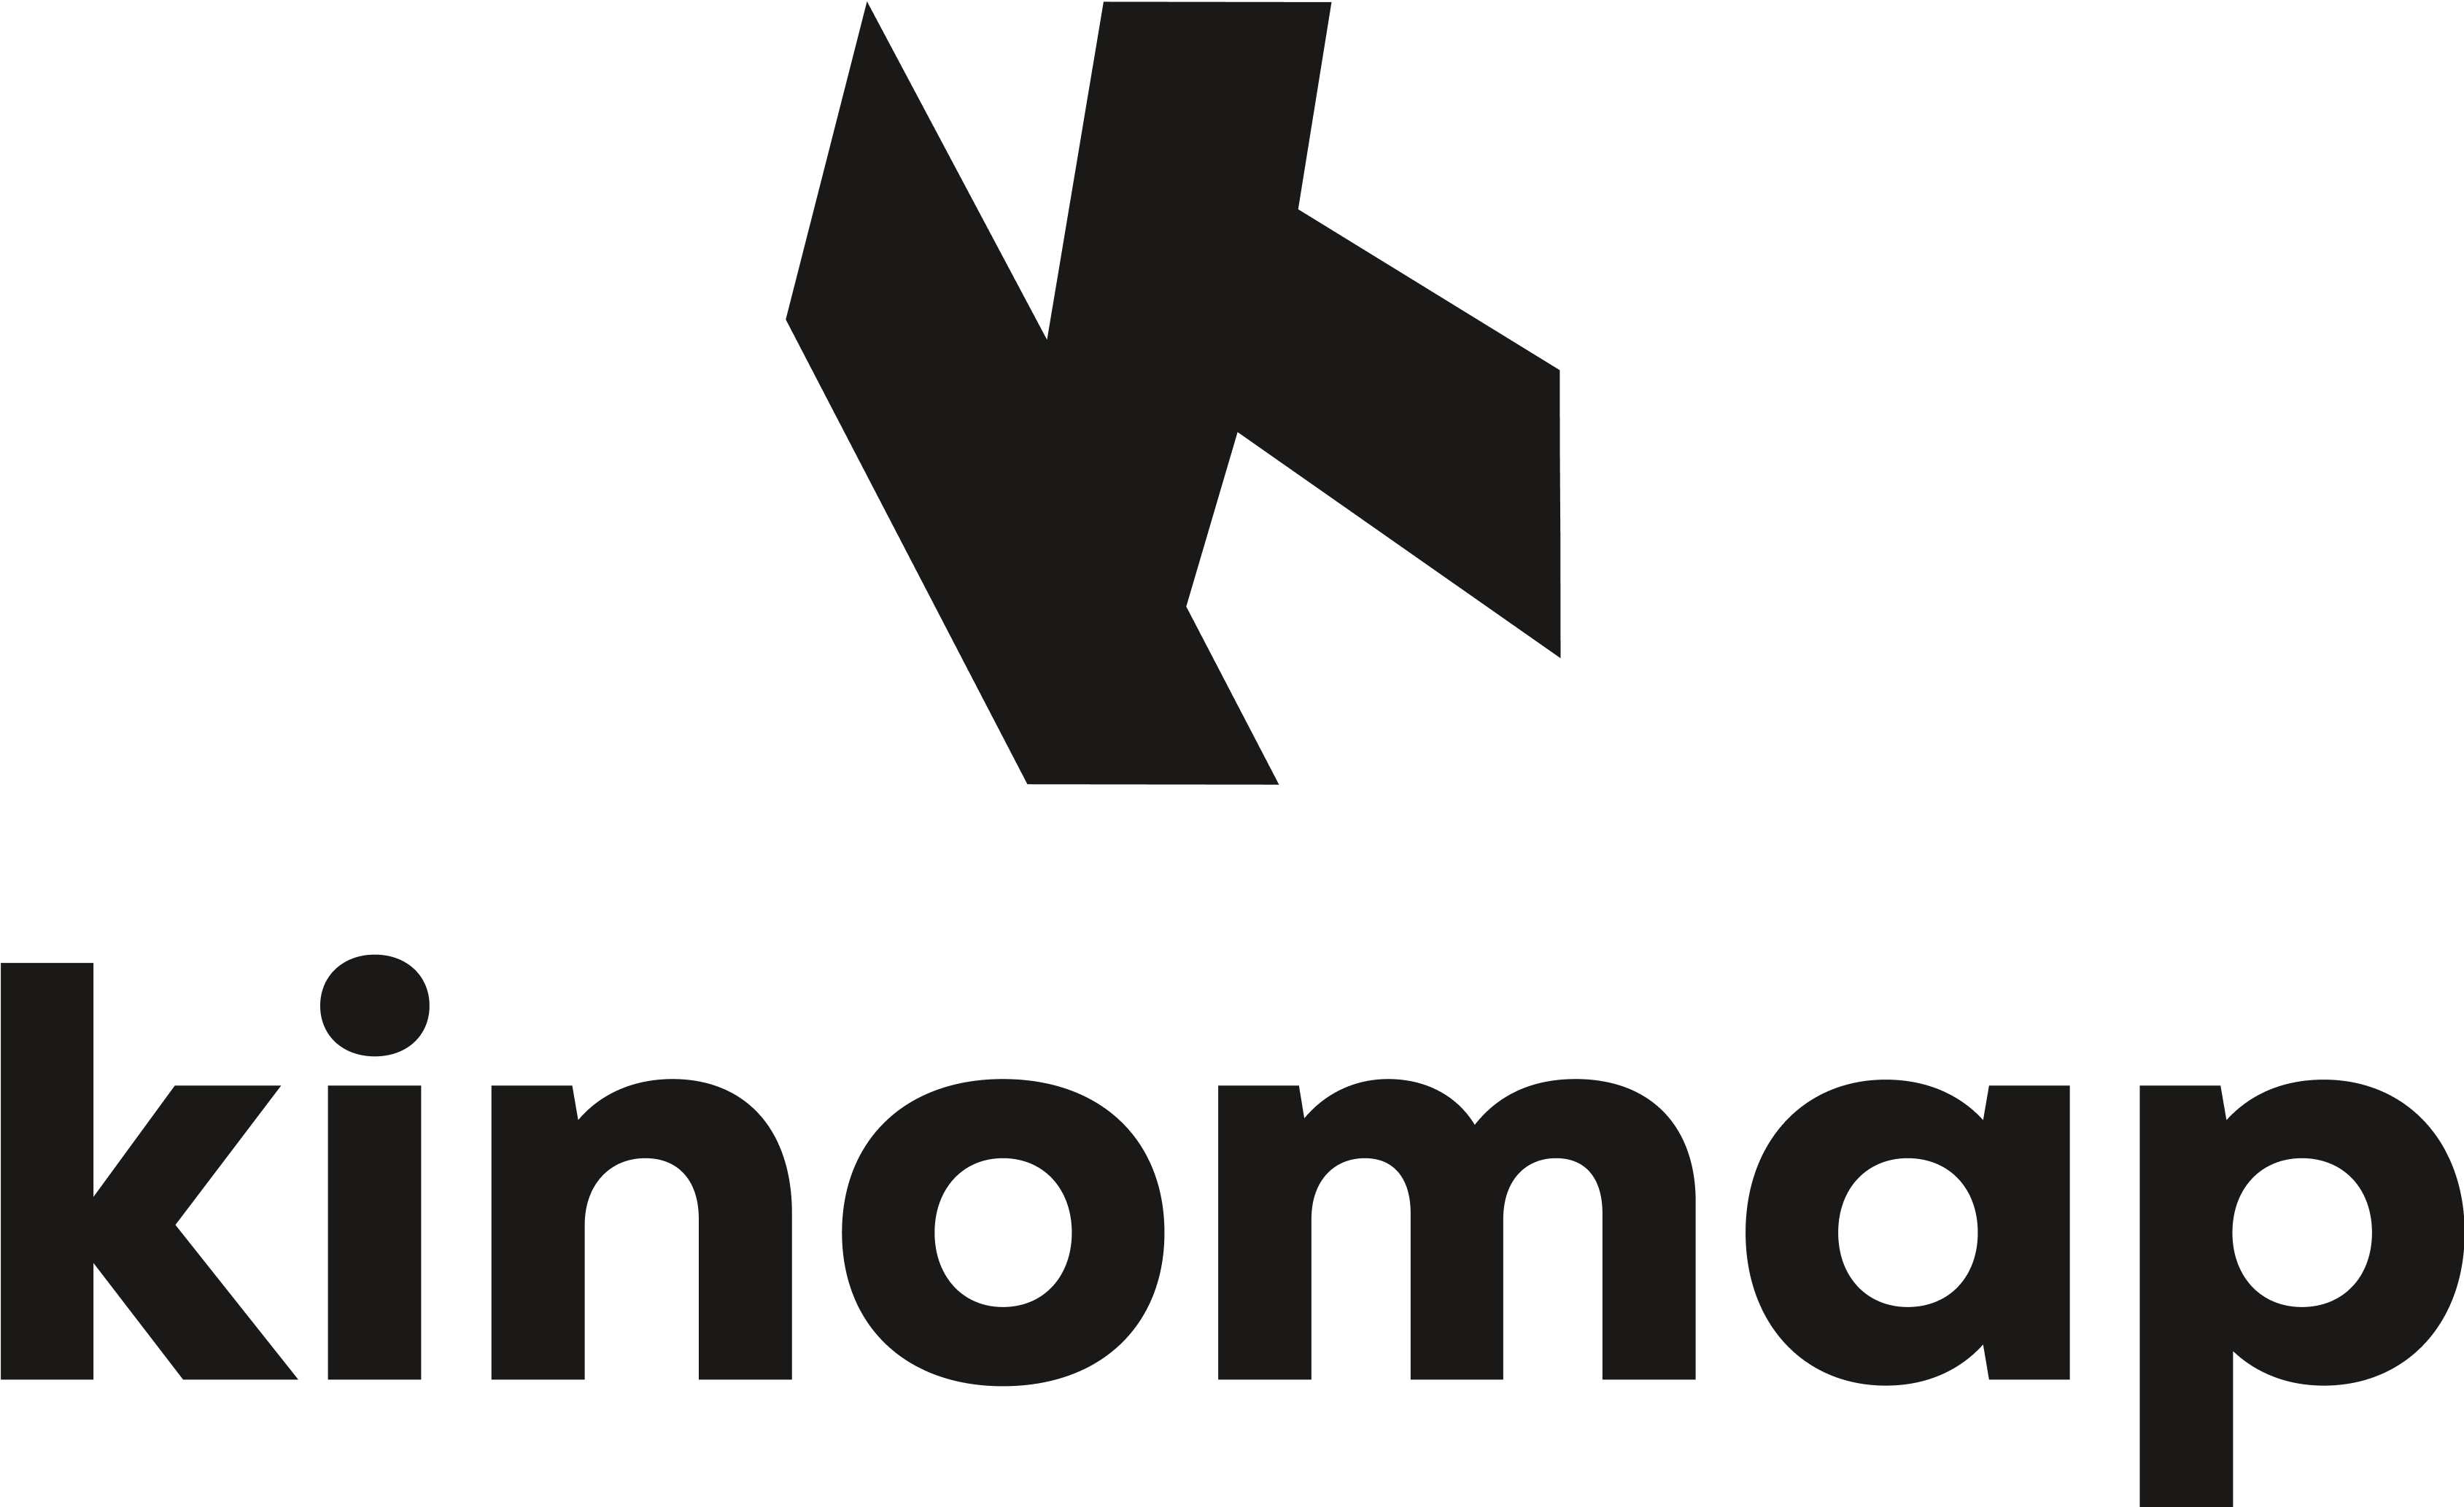 Kinomap logo